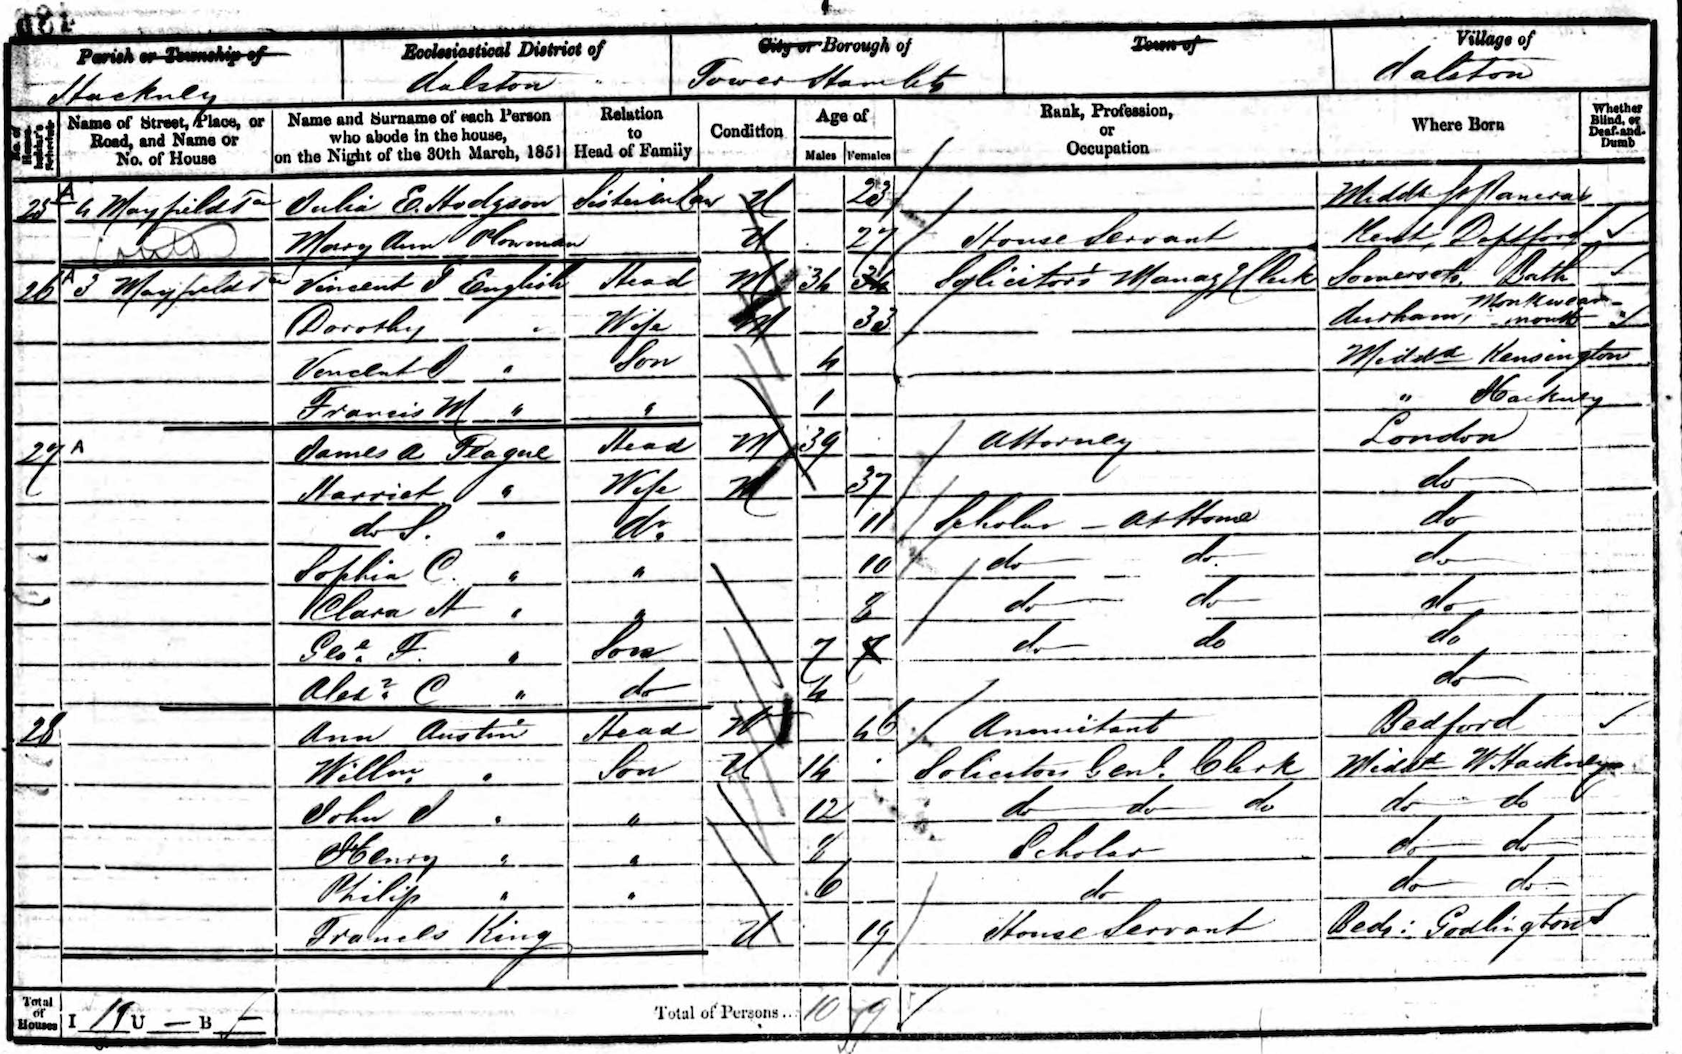 James Alexander Teague family on 1851 census